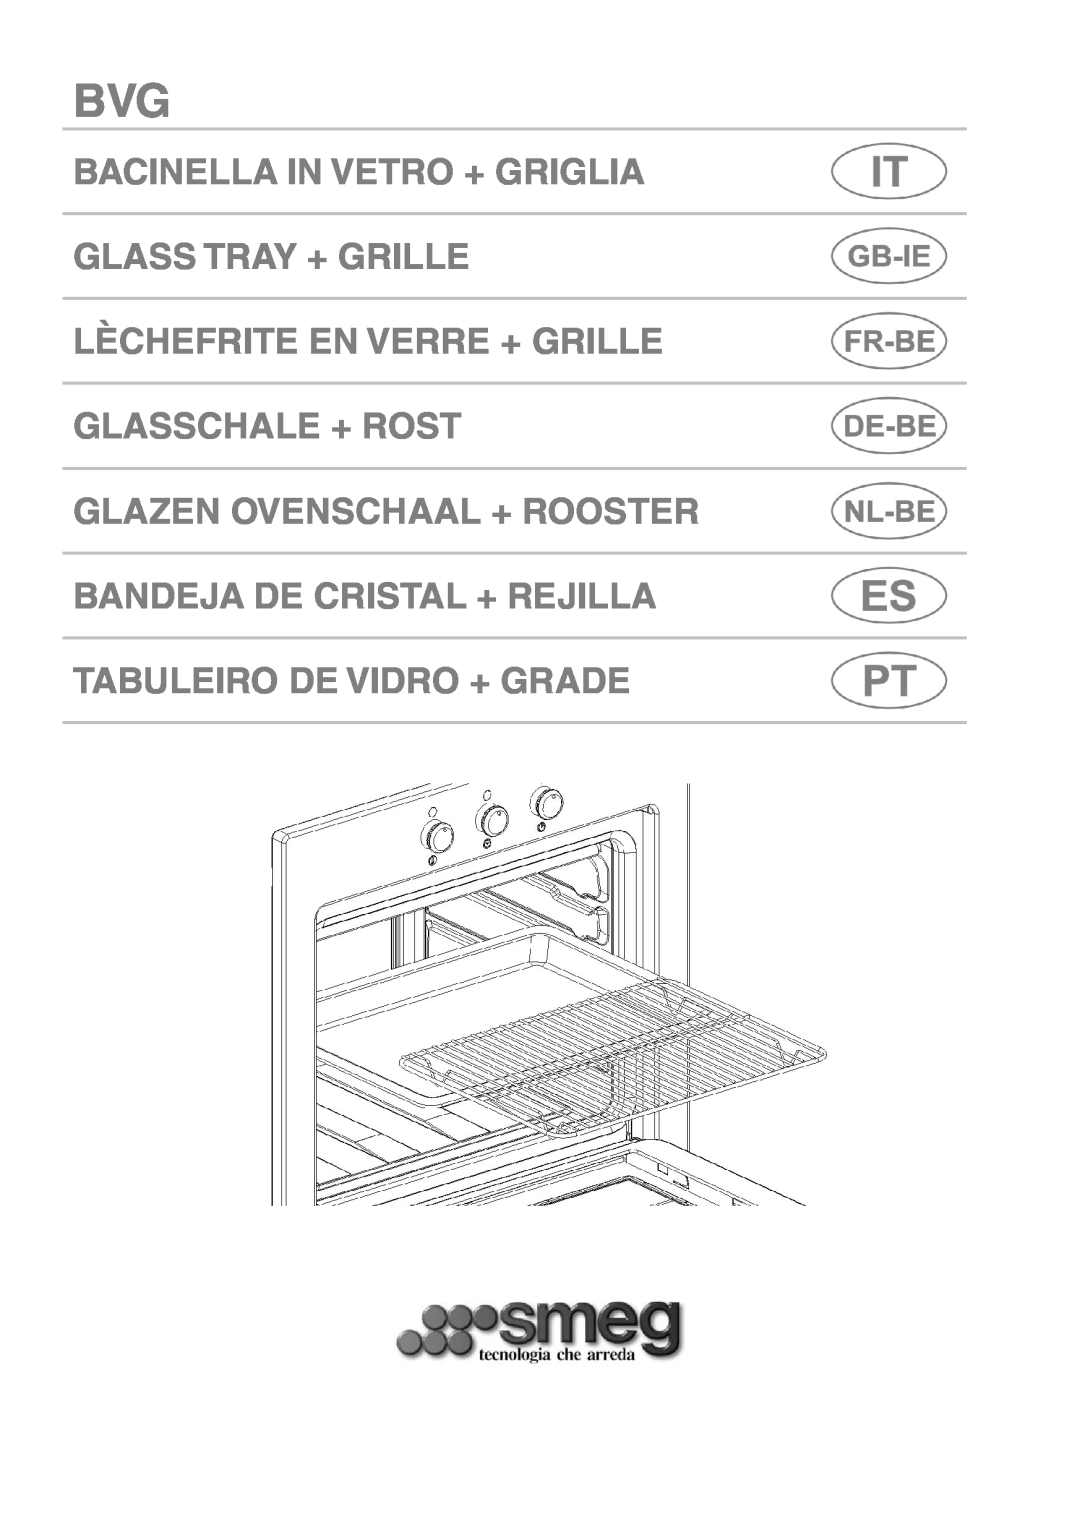 Smeg BVG manual Bacinella In Vetro + Griglia Glass Tray + Grille, Lèchefrite En Verre + Grille Glasschale + Rost 